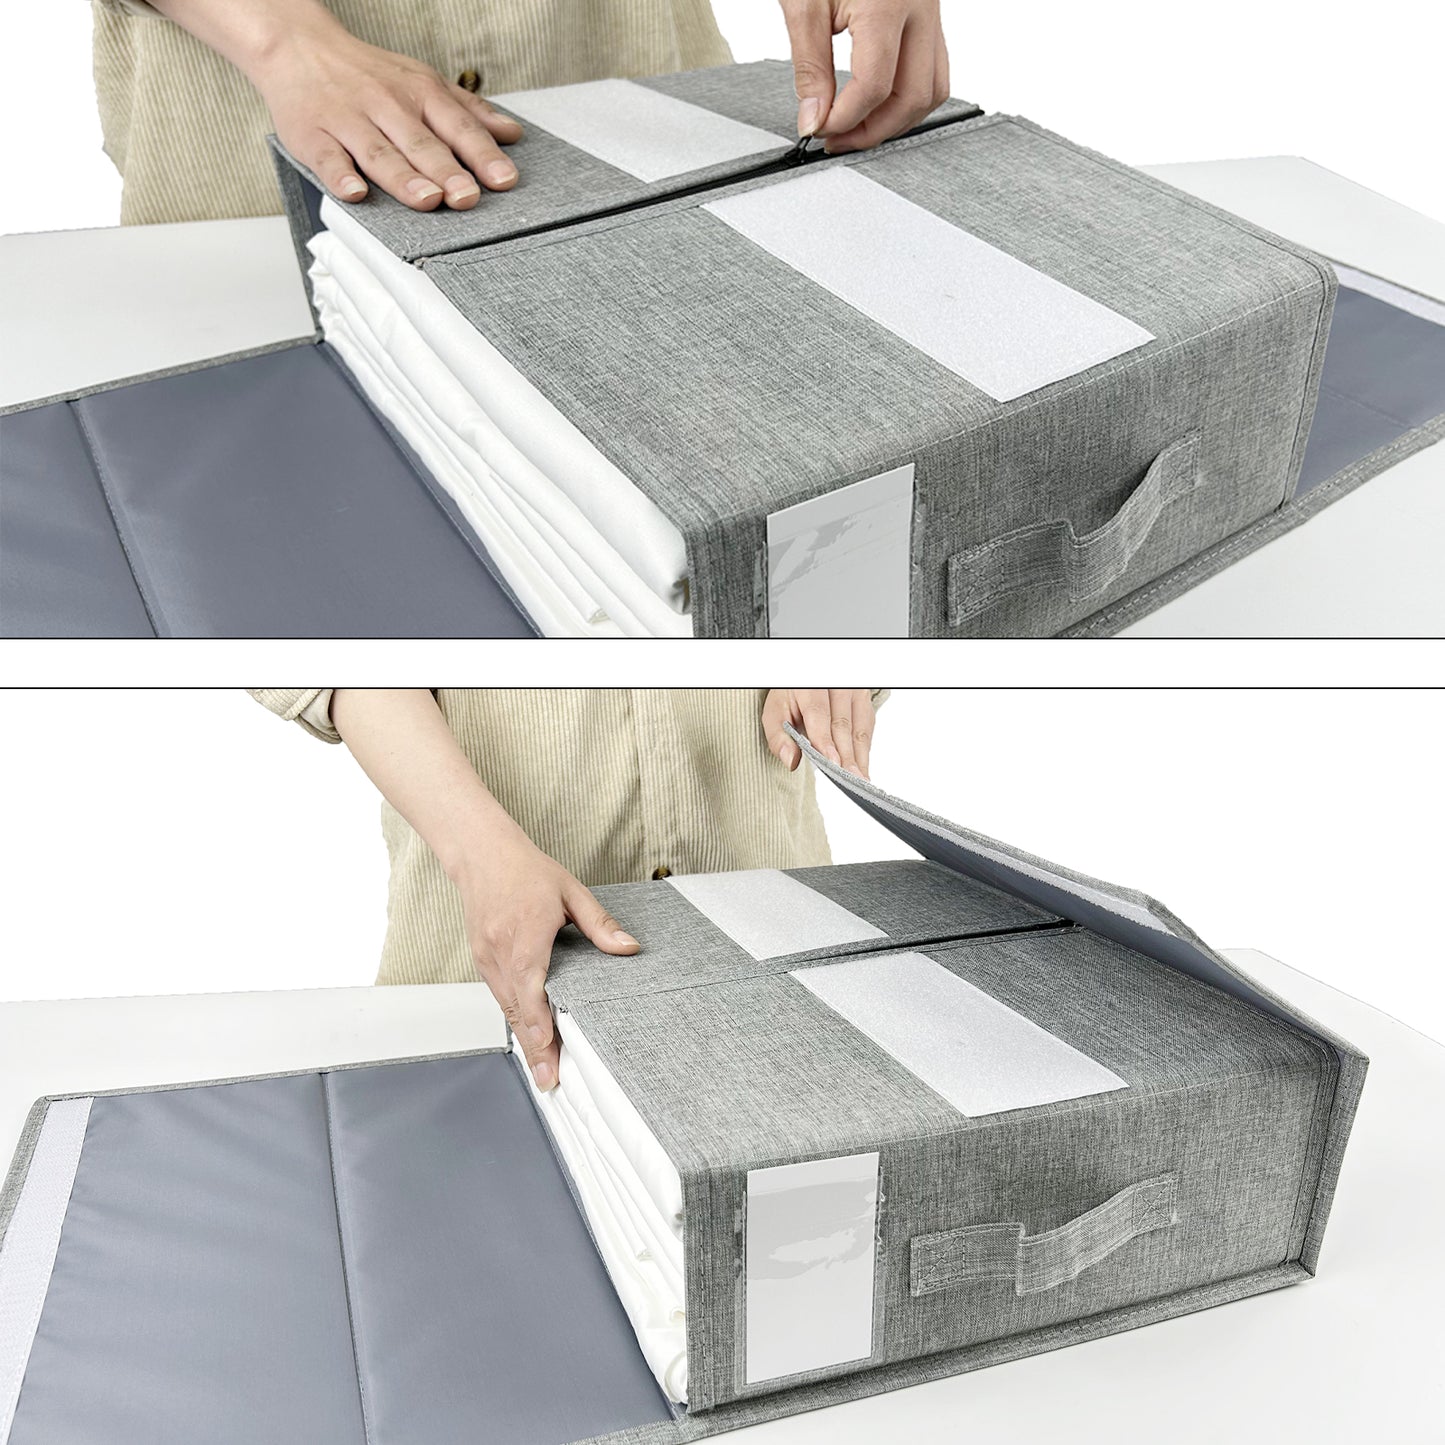 Foldable Bed Sheet Set Organizer-2Pack